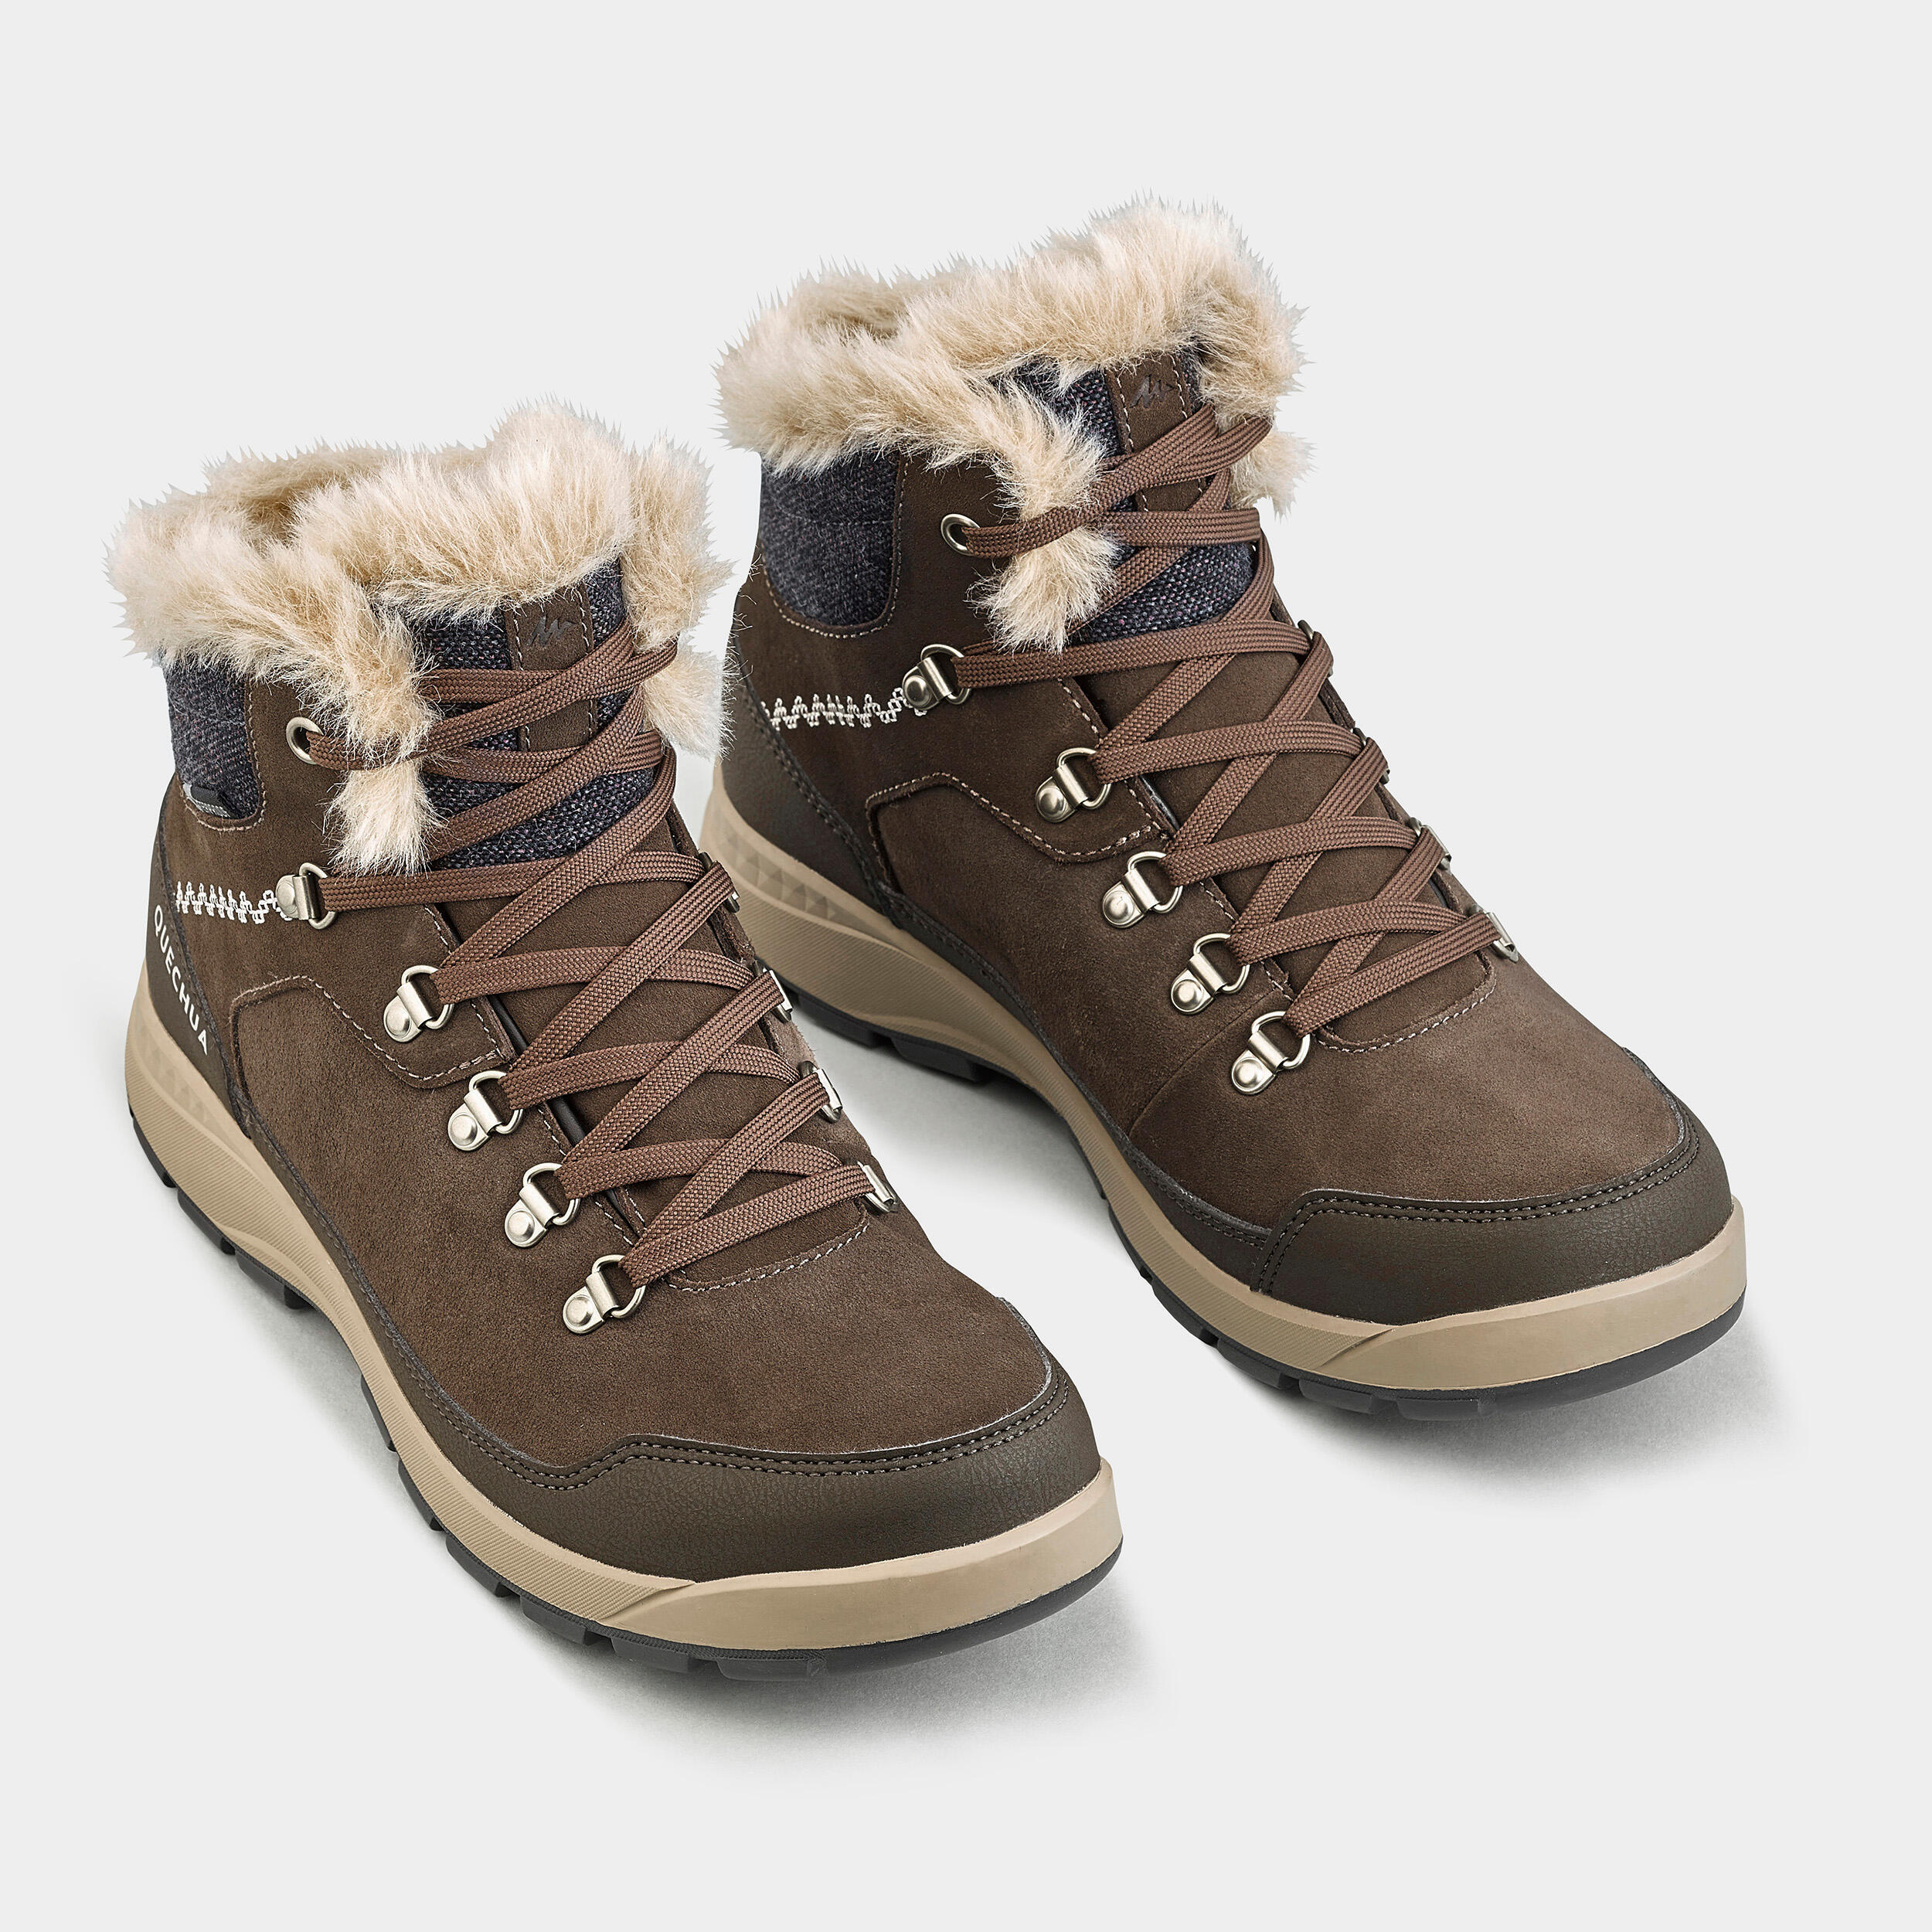 Women’s leather warm waterproof snow boots - SH900 Mid 2/5